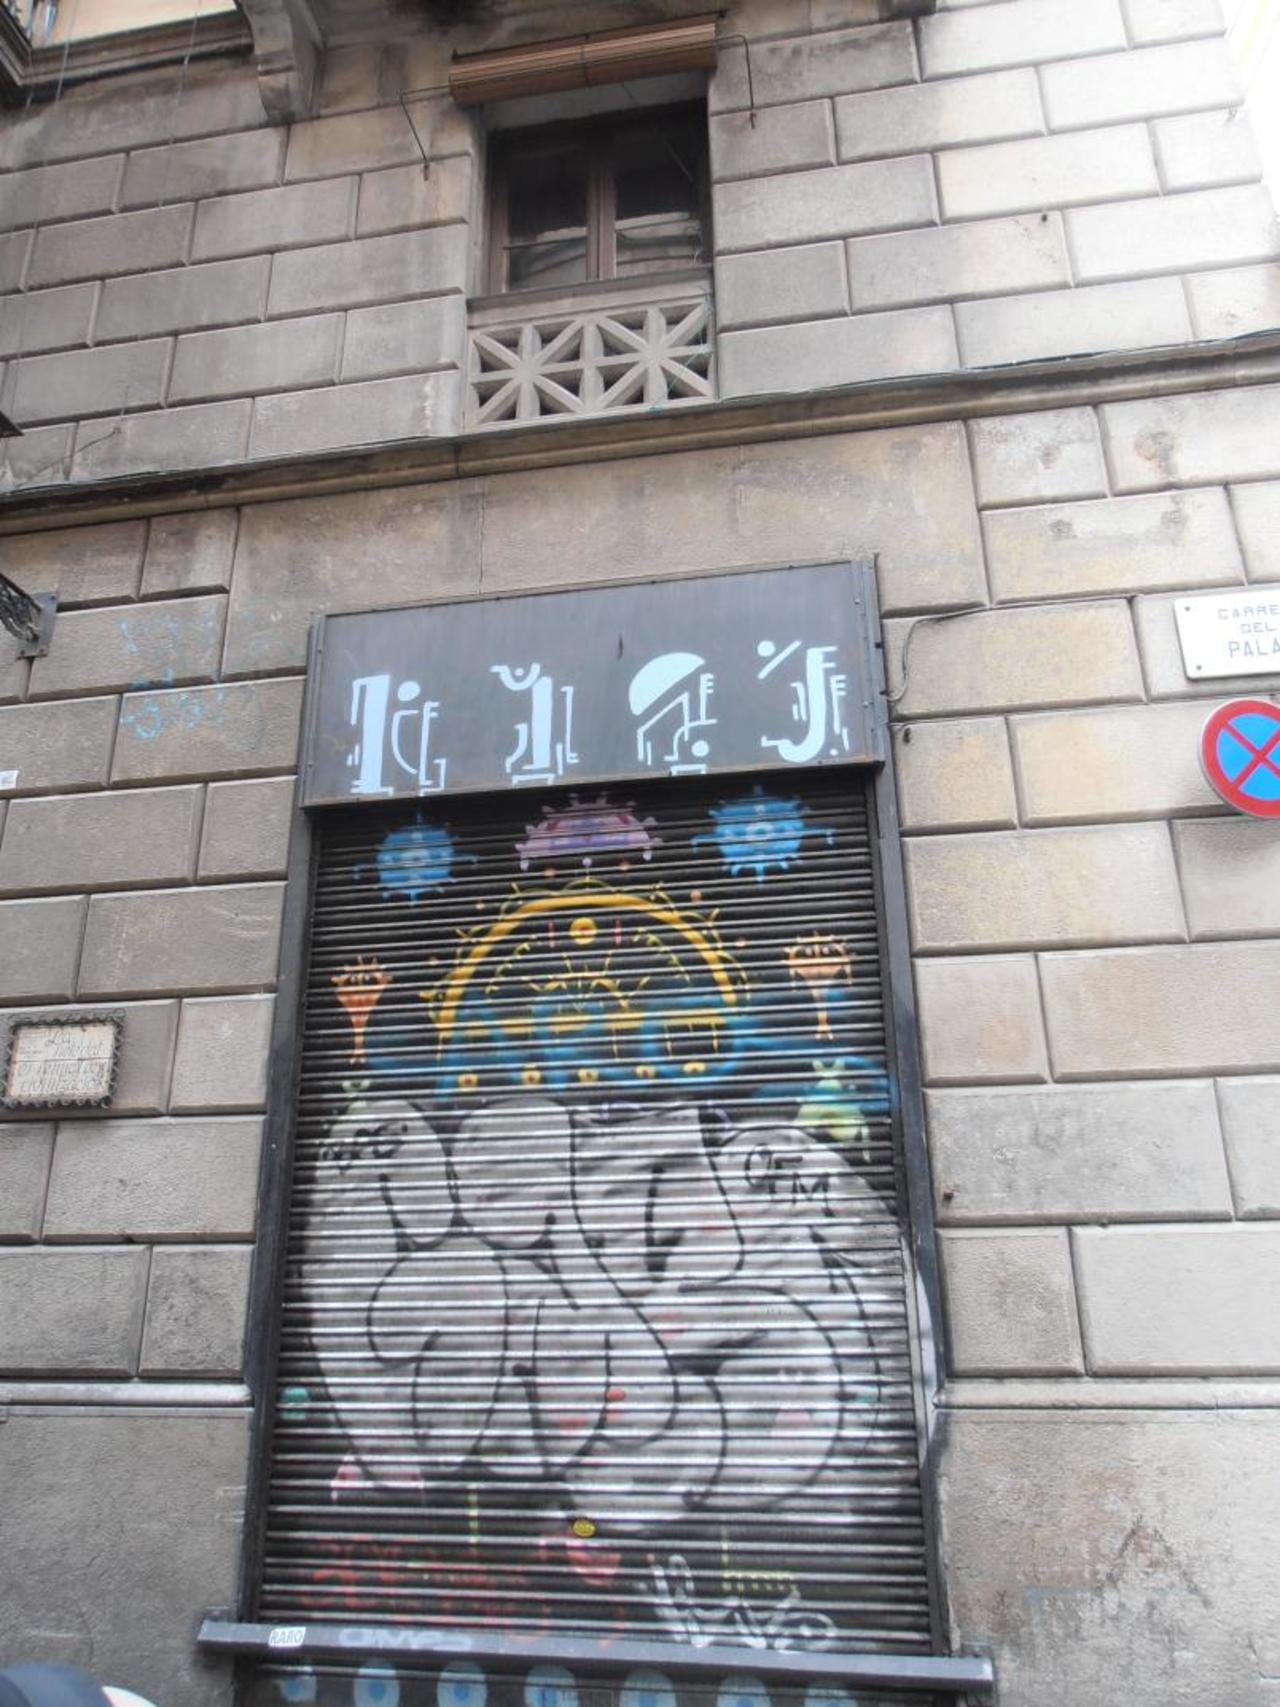 #graffiti #streetart #Barcelona #BarcelonaStreetStyleTour #ILA2015 https://t.co/57RVkyZqXp